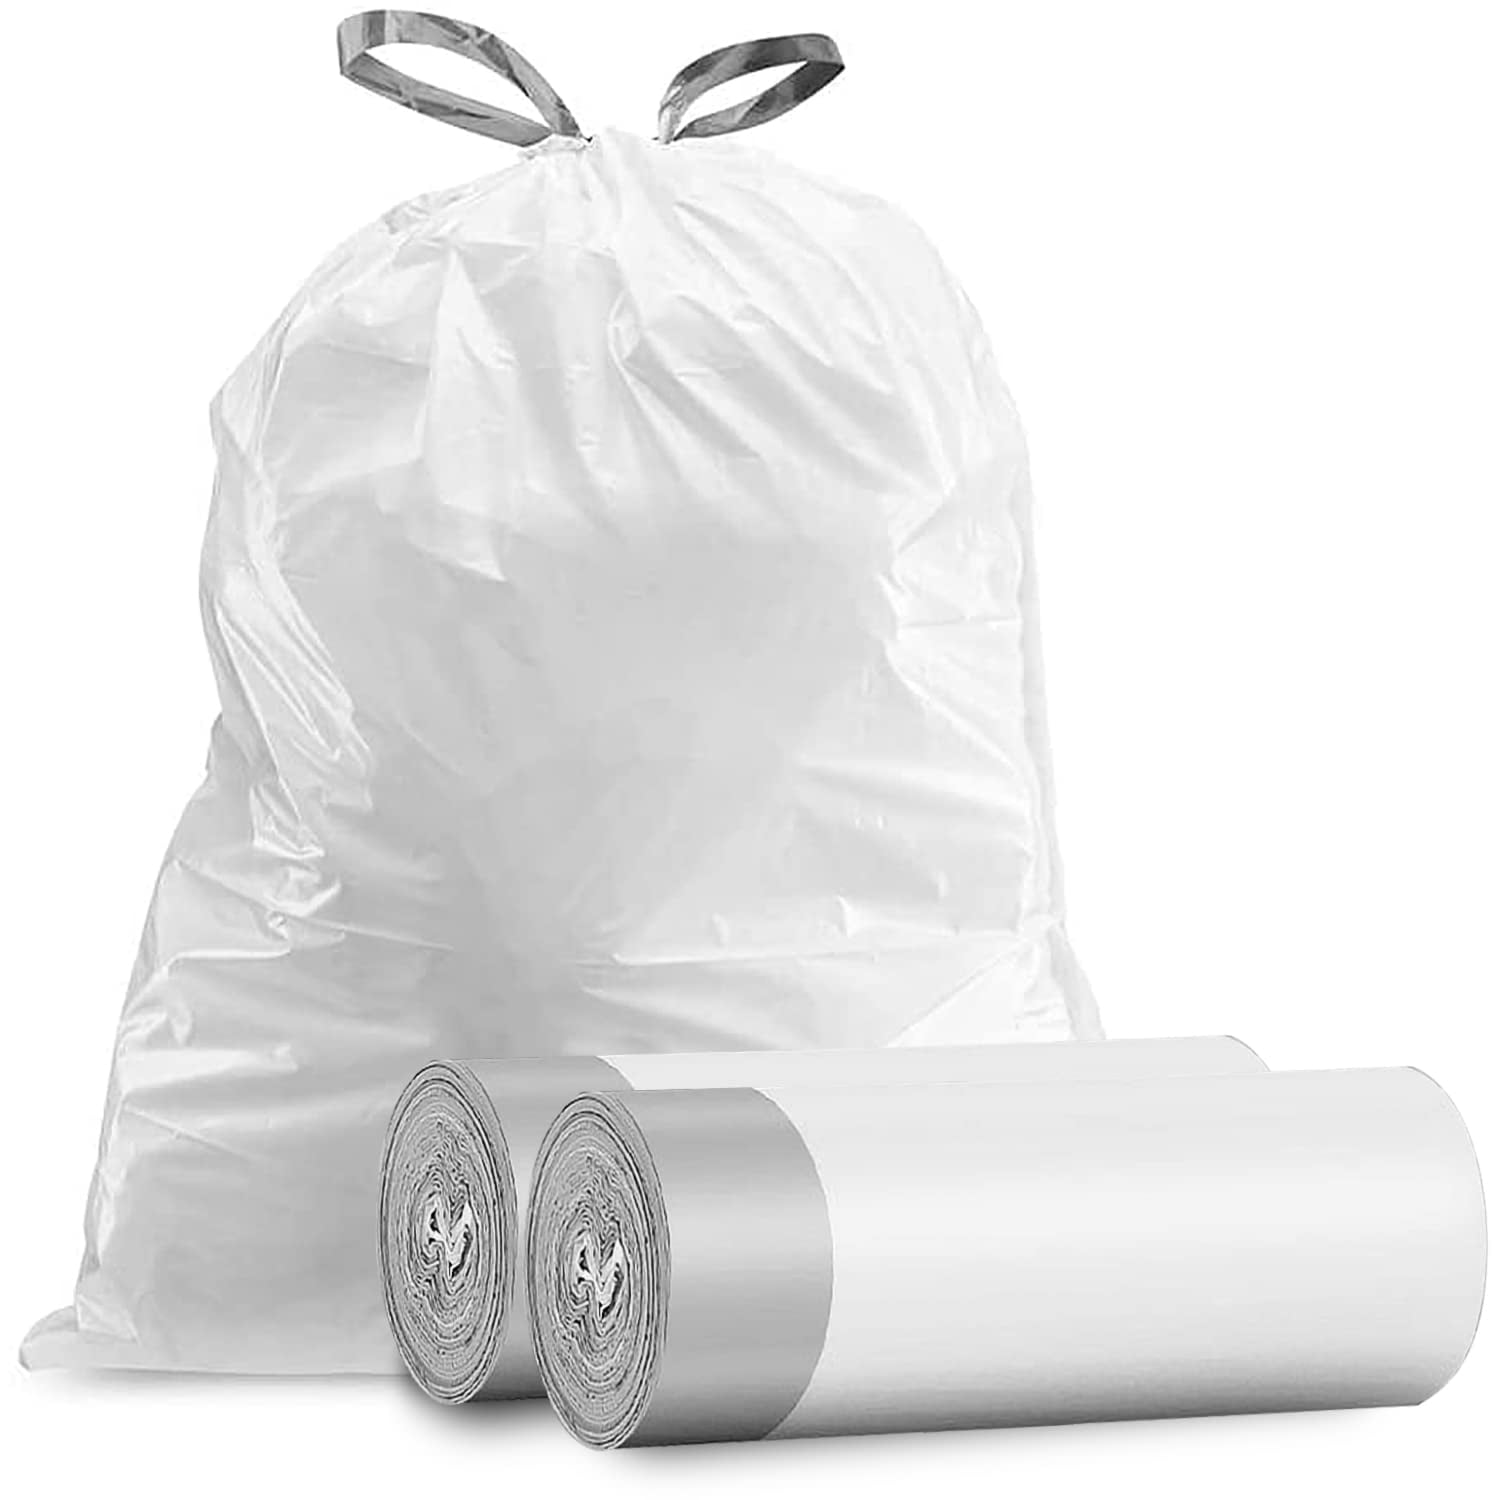  Medium Trash Bags, 8 Gallon Extra Thick Garbage Bags 150PCS for  Bathroom, Bedroom, Office, Home Waste Bin Plastic Trash Can Liners, Pets  Litter Bags. (8 GAL) bolsas de plastico para basura 